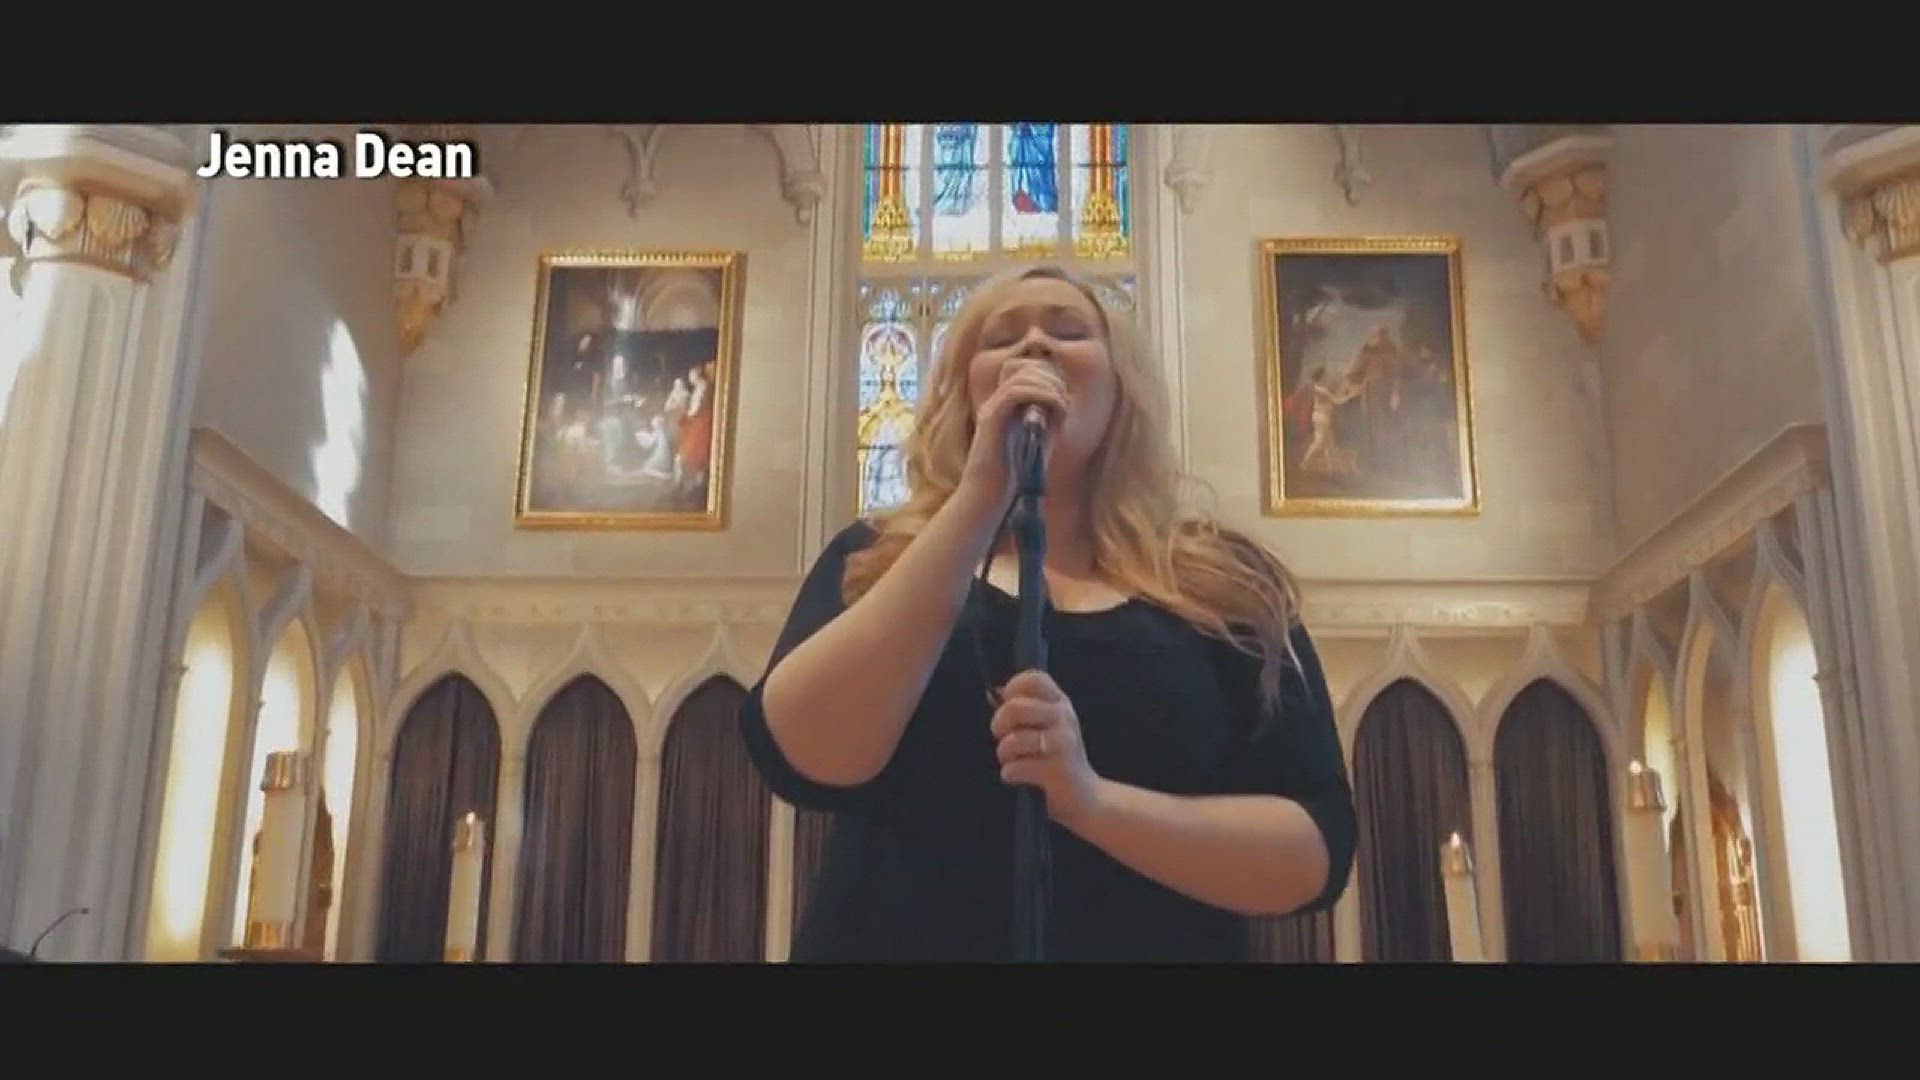 Proffitt Report: "Prayer" music video seeks to unify